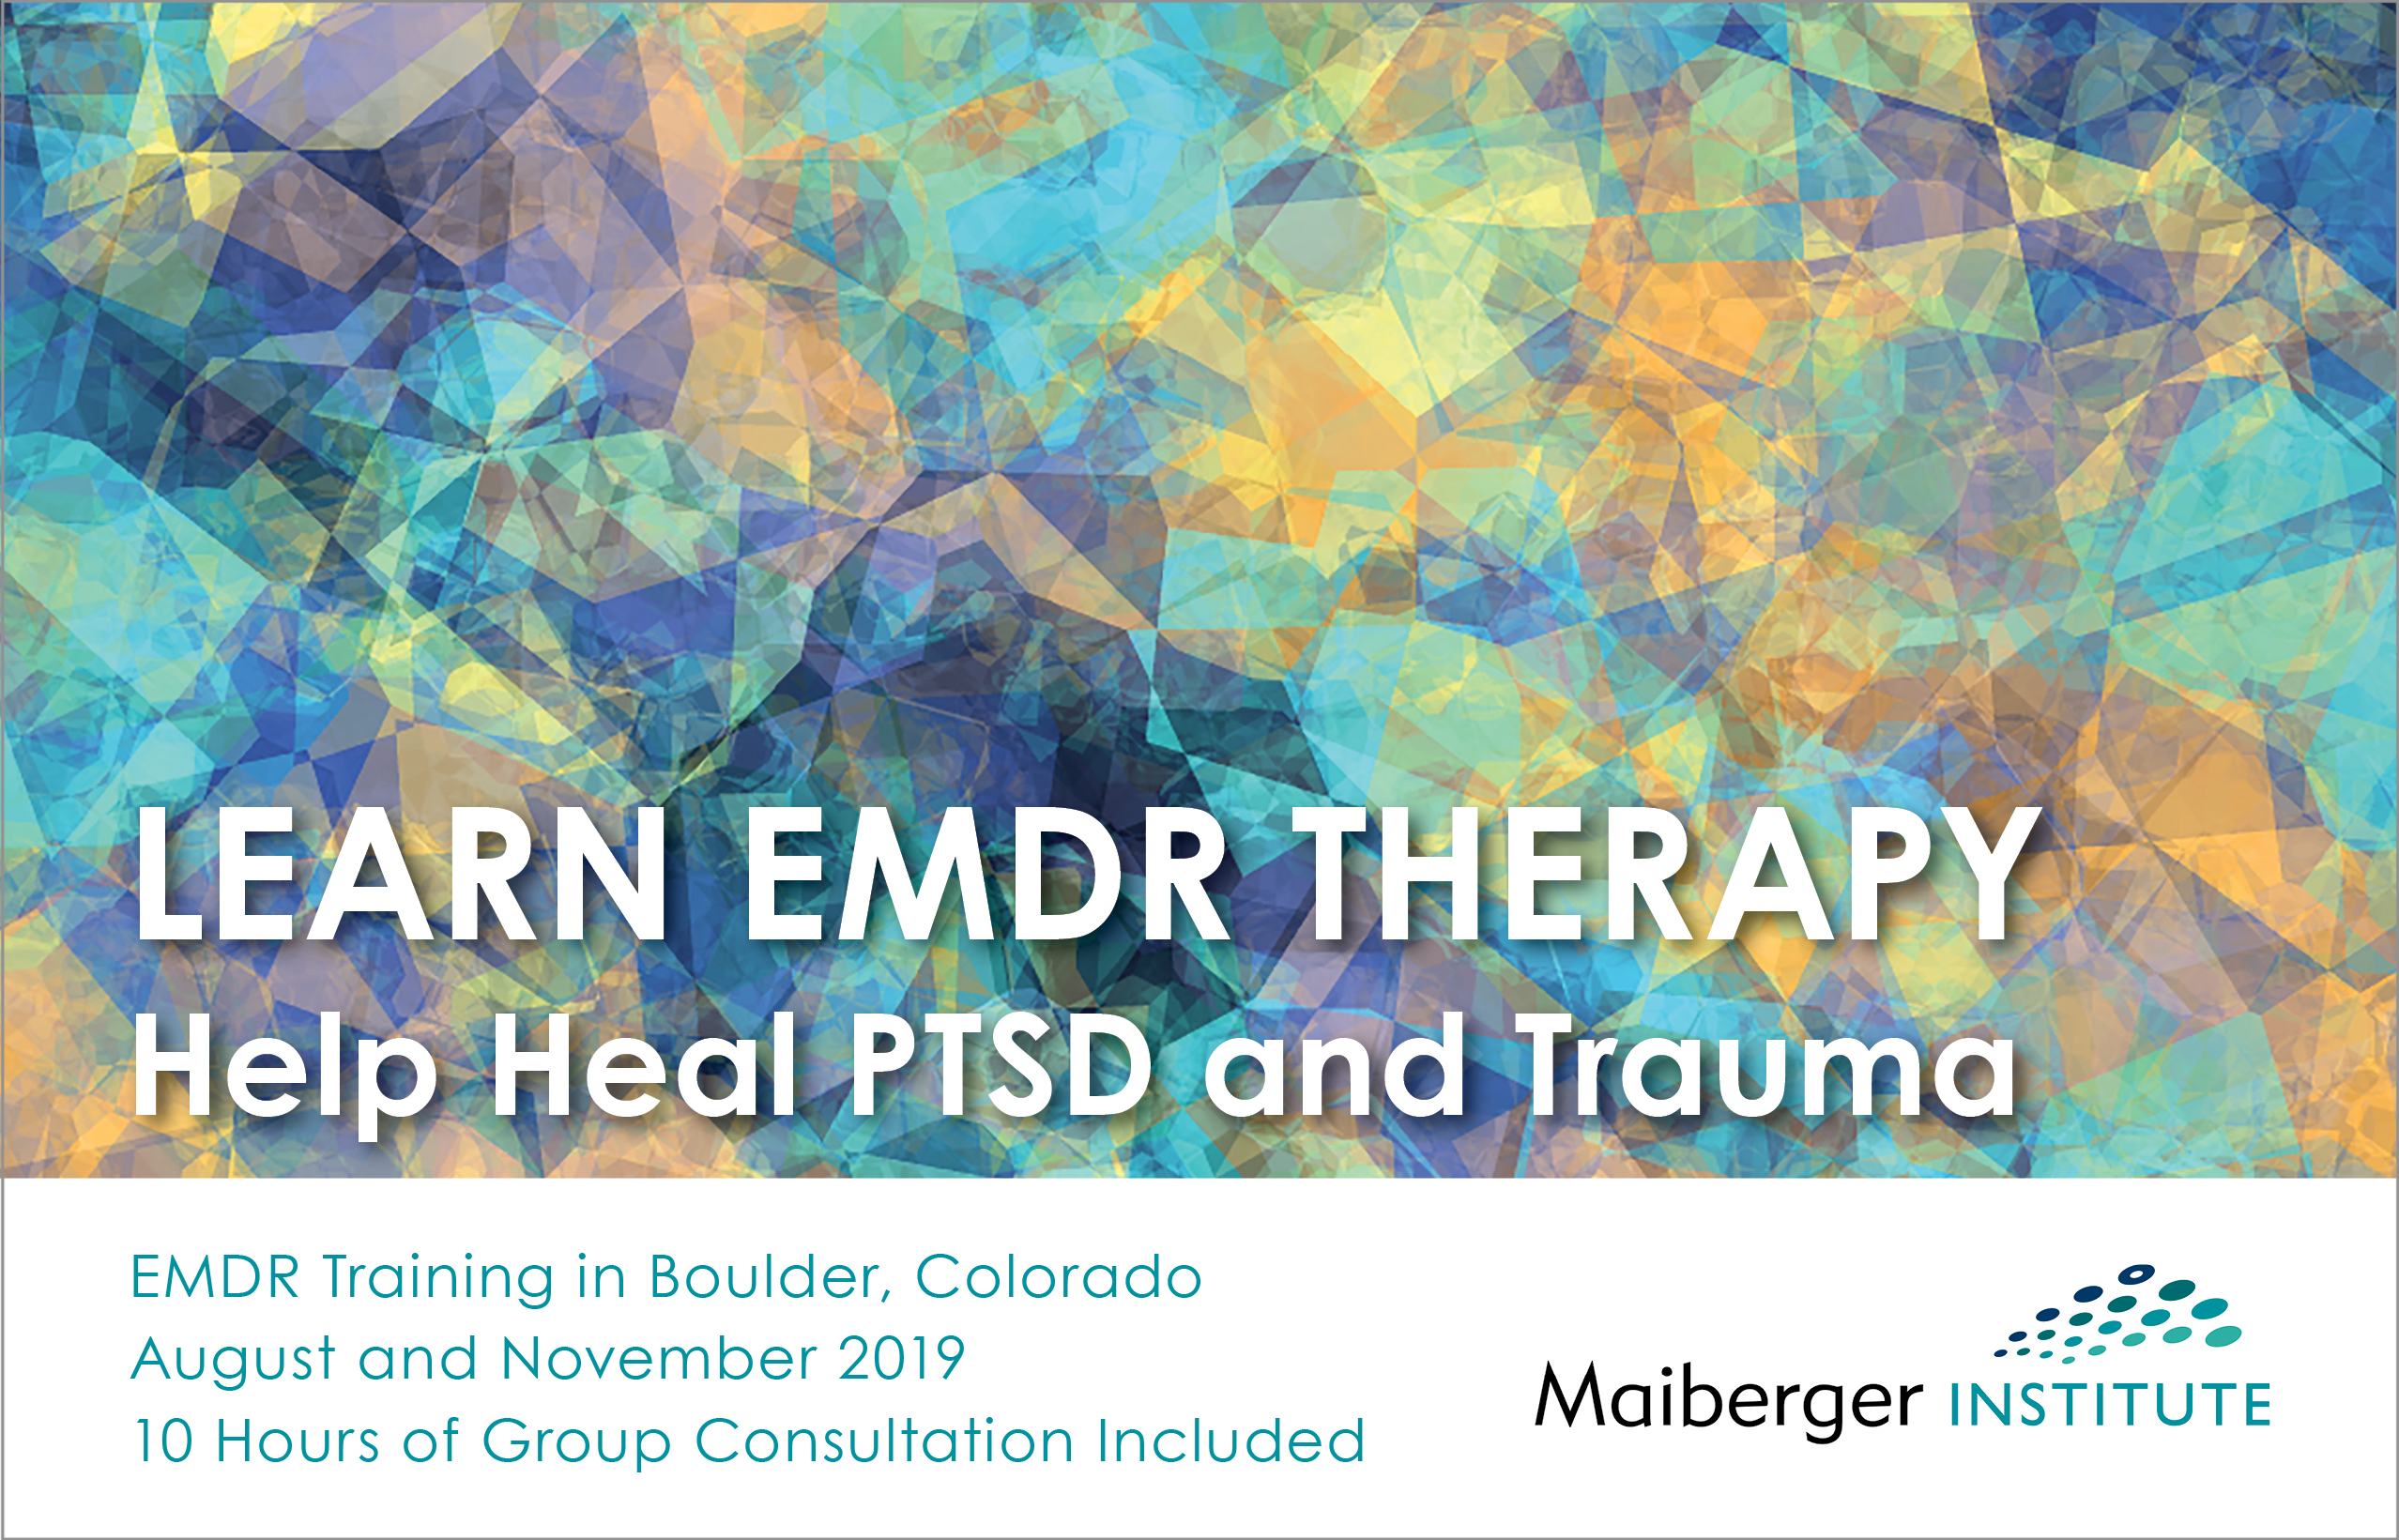 EMDR Training in Boulder Colorado August and November 2019